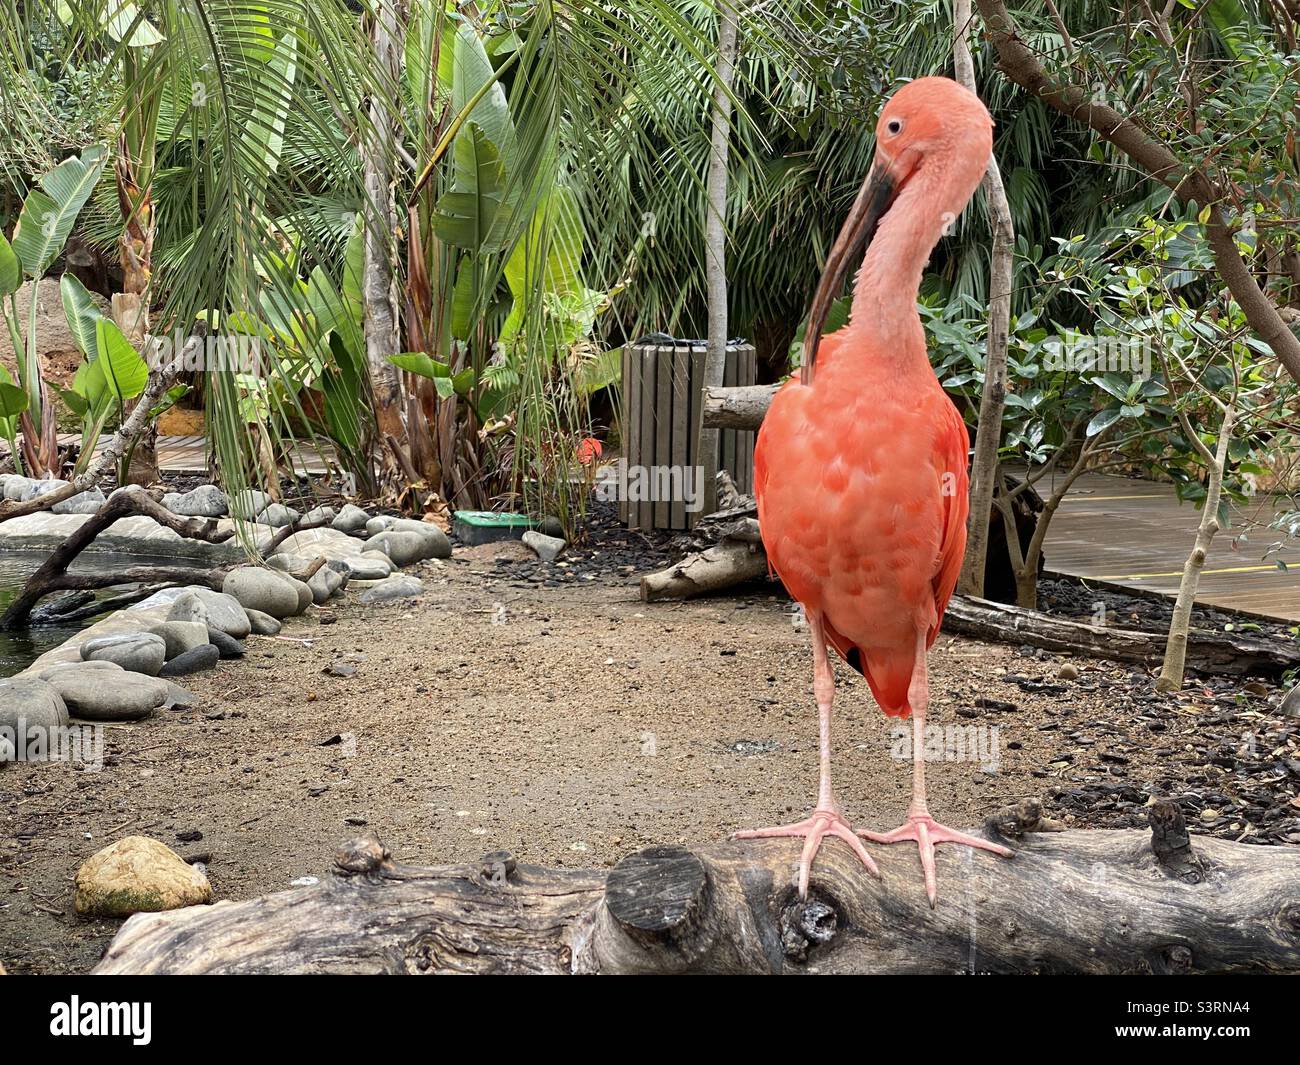 Scarlet ibis in a wildlife sanctuary Stock Photo